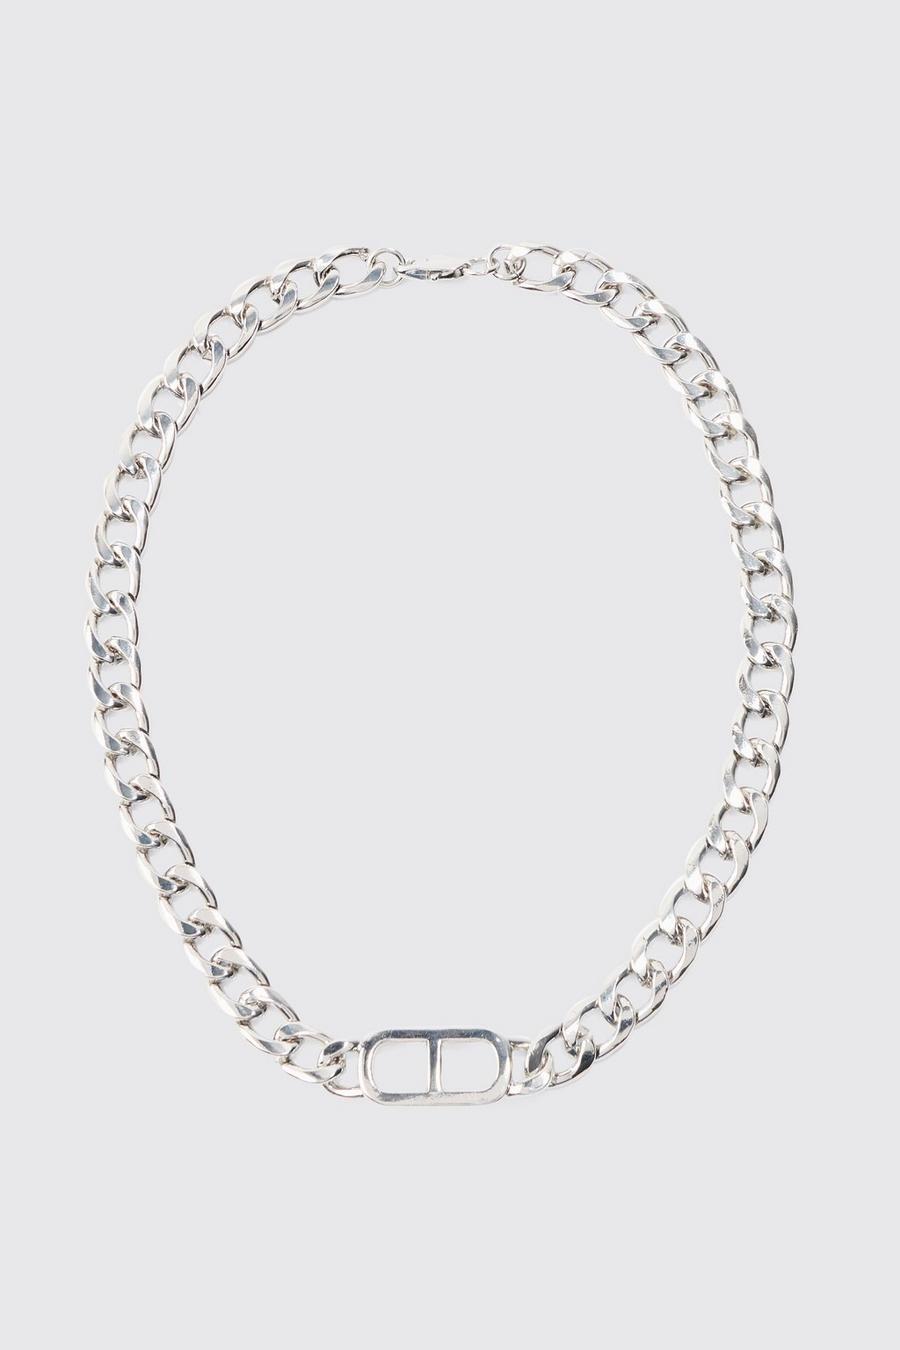 Klobige Metall-Halskette in Silber, Silver